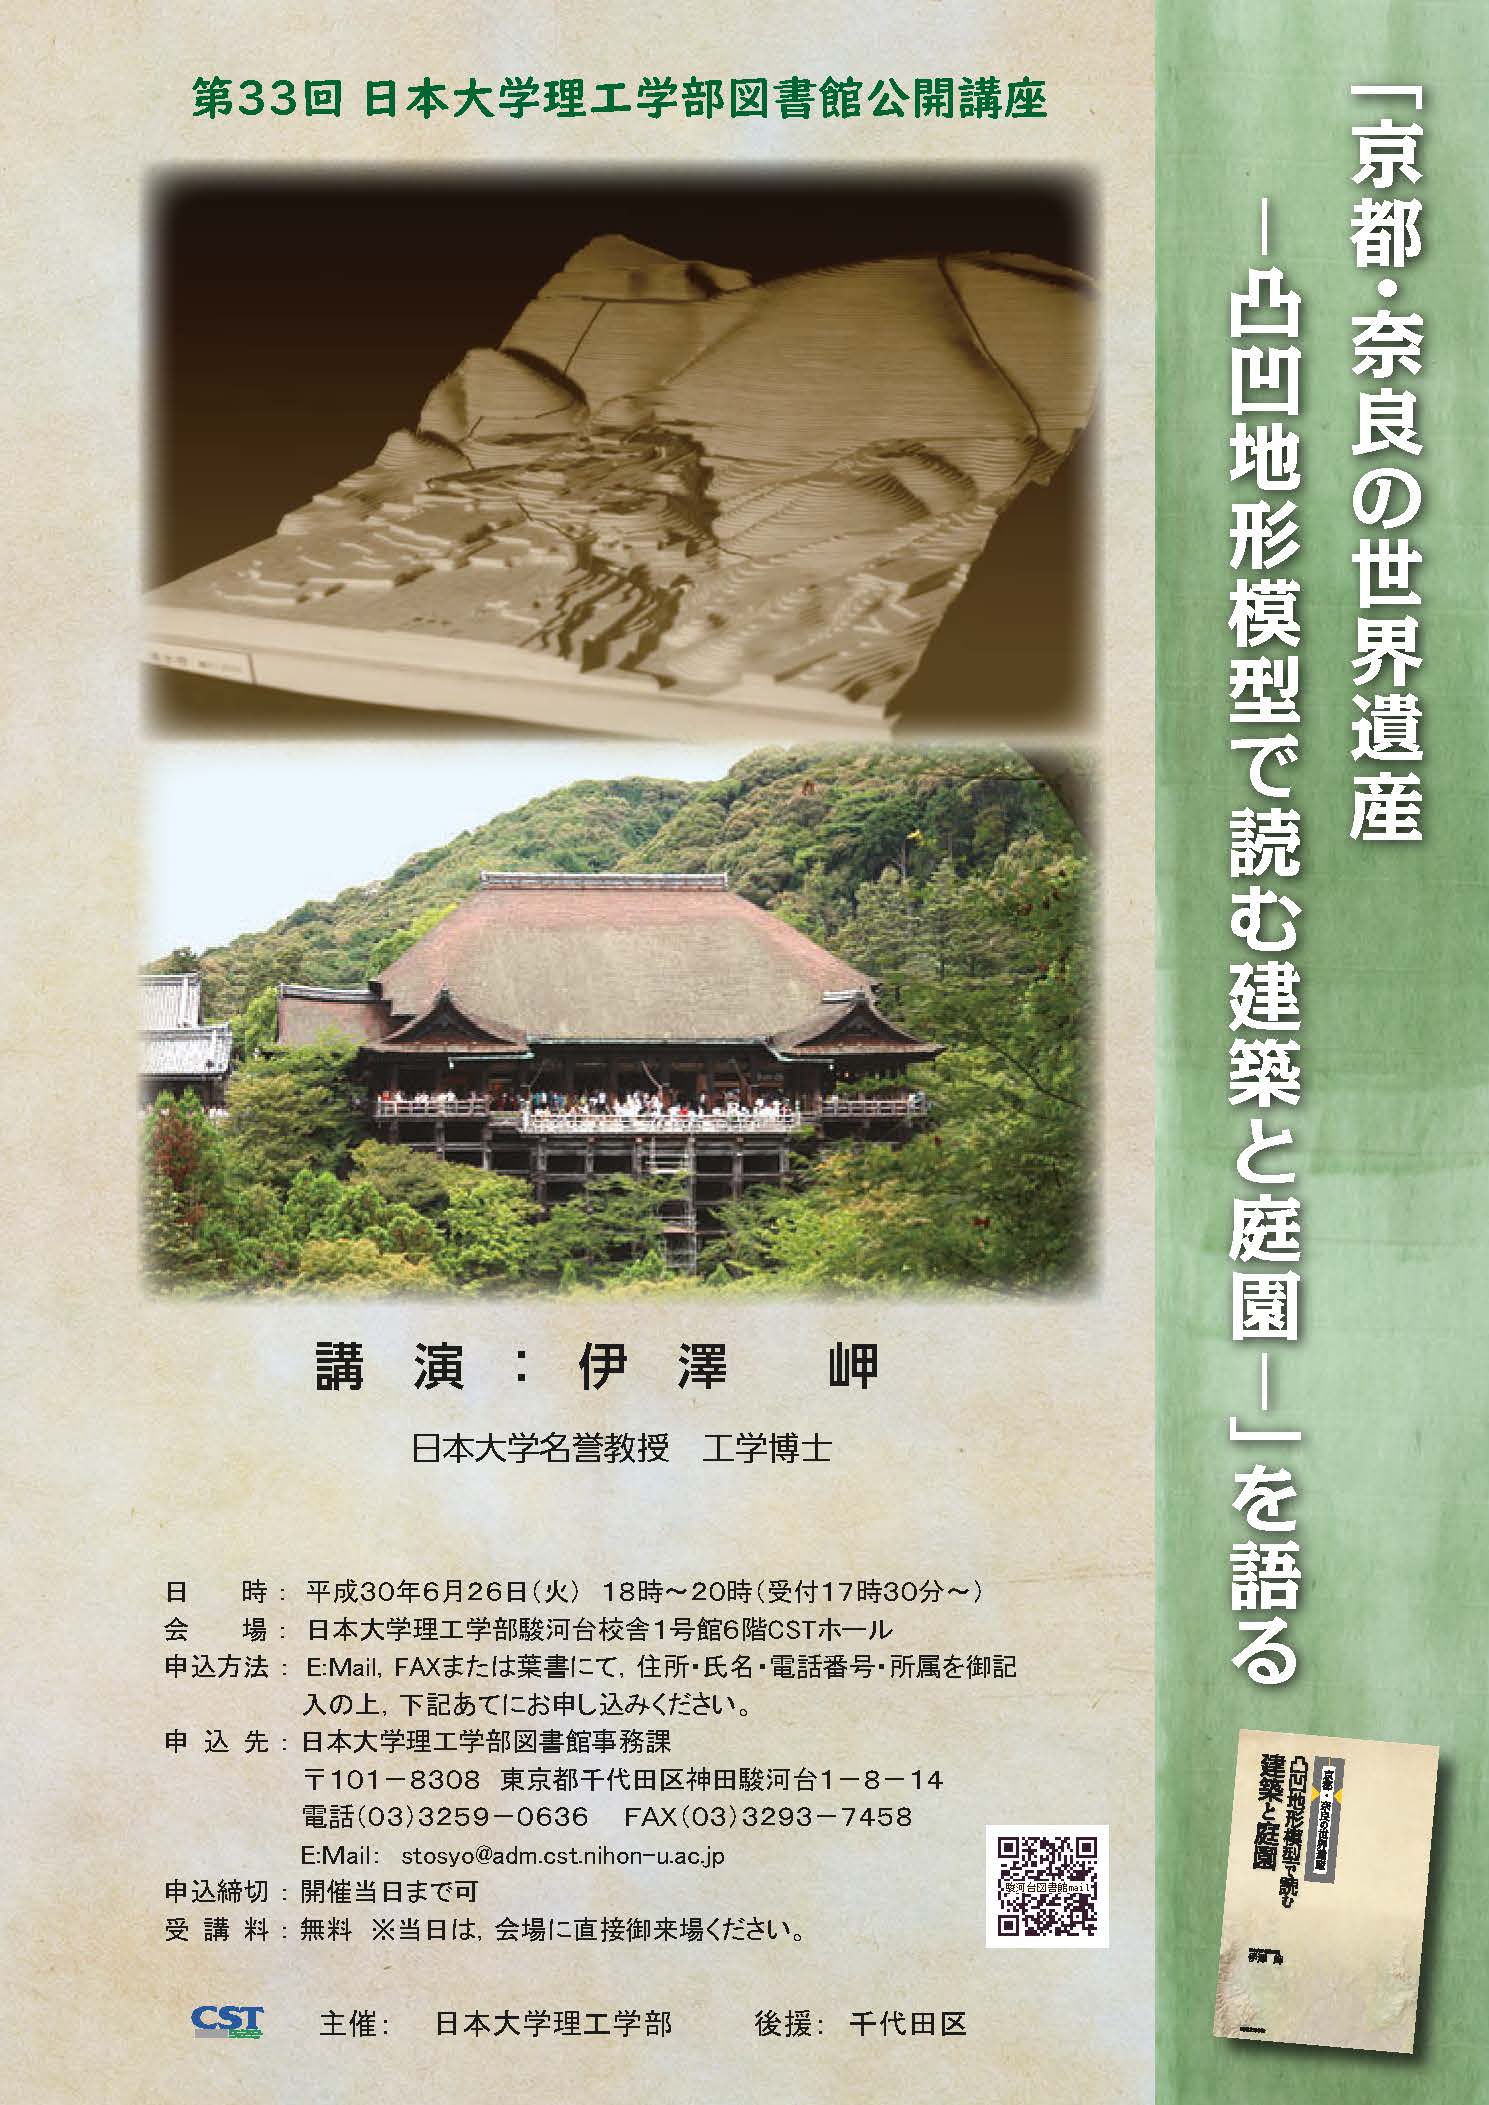 京都・奈良の世界遺産 ―凸凹地形模型で読む建築と庭園―」を語る 日本大学理工学部図書館